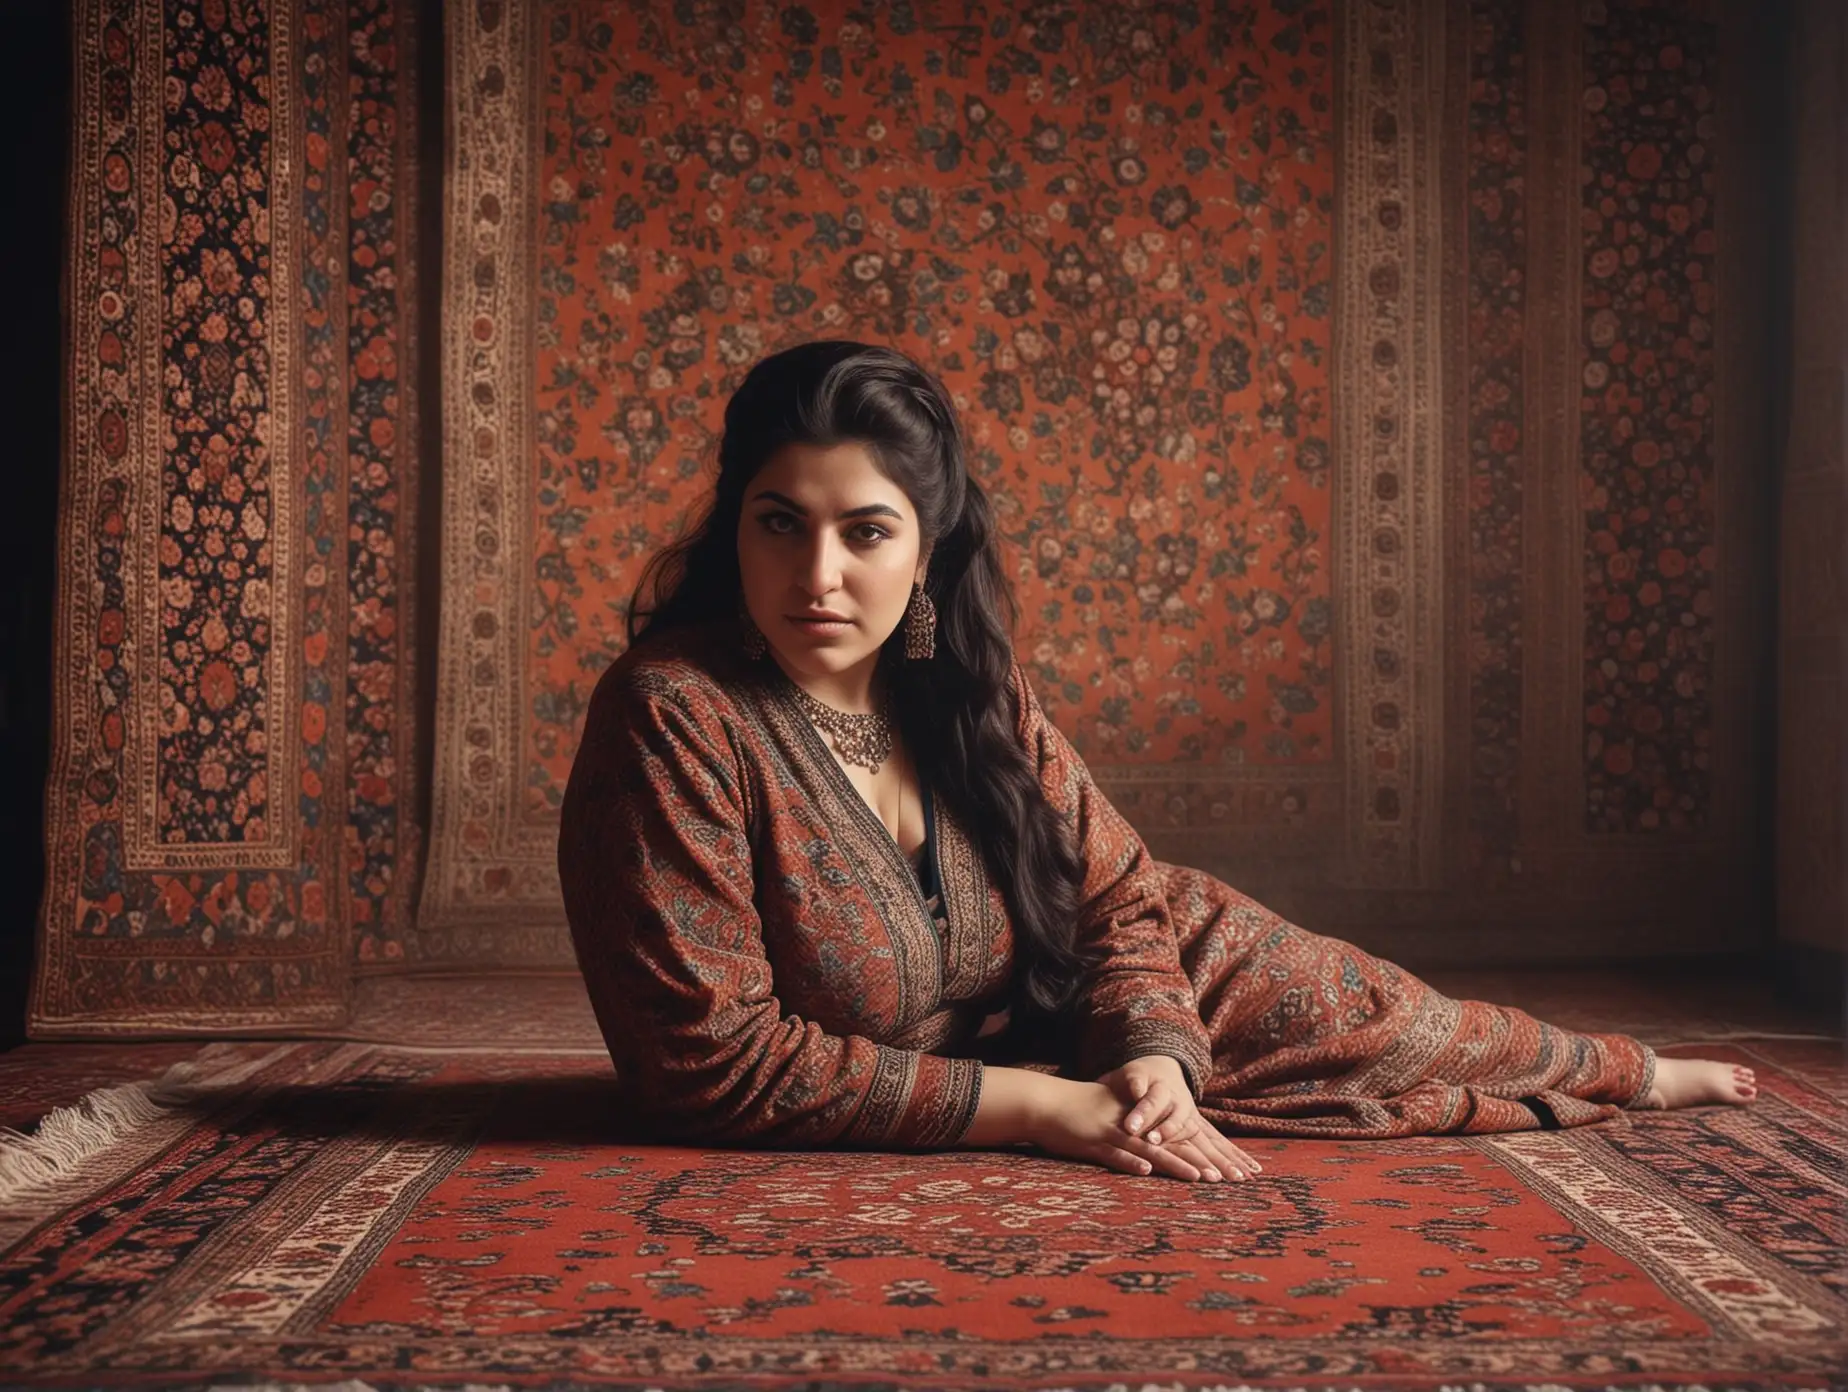 cinematic lighting, cinematography, surreal, retro fat persian woman,  Persian rugs, portrait,  spring season